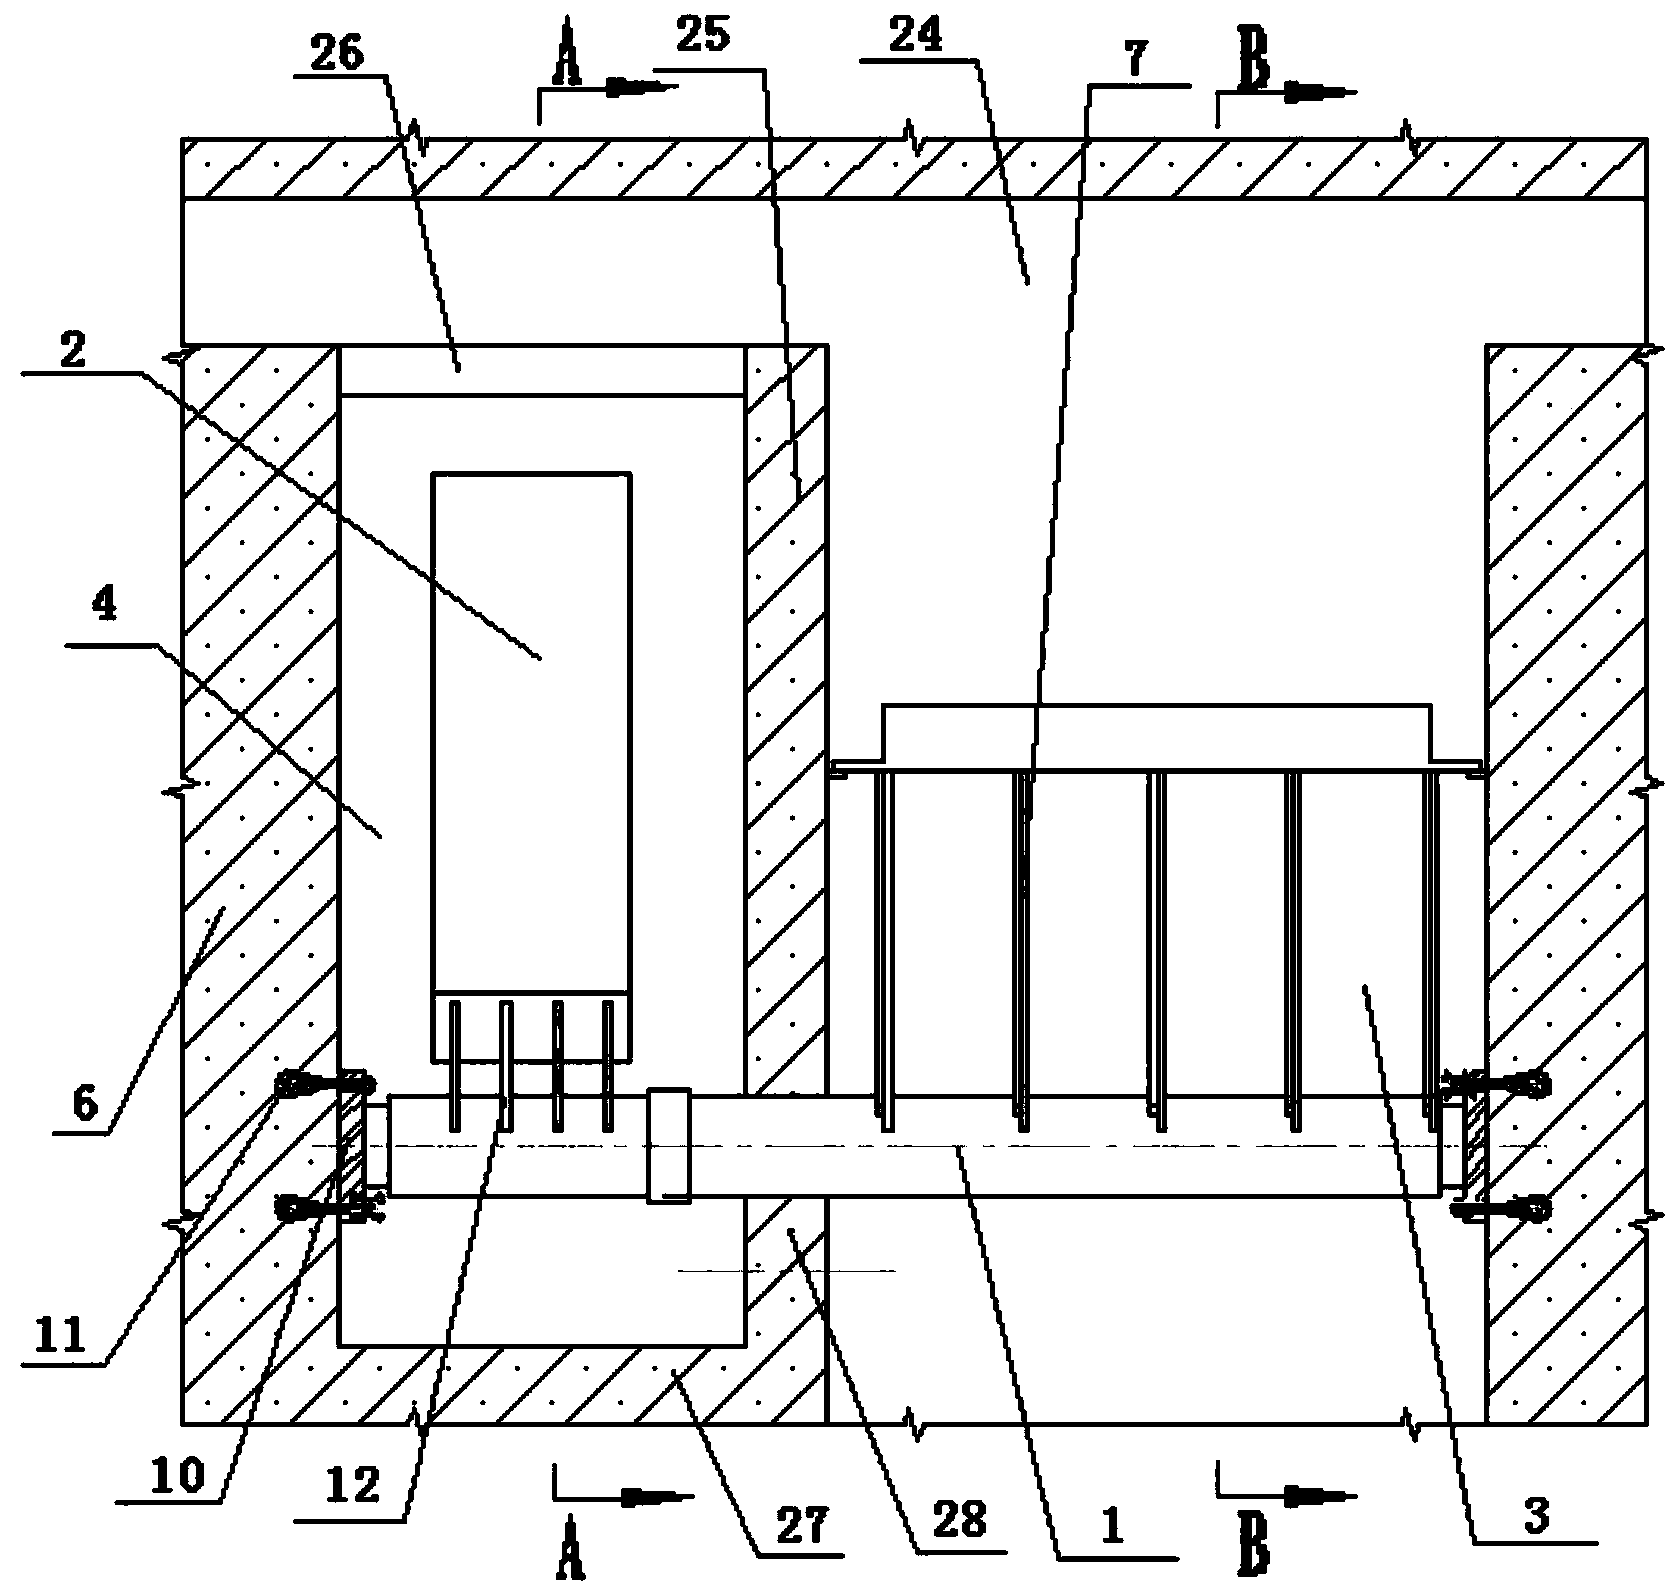 Buoyancy-tank type upstream control weir gate